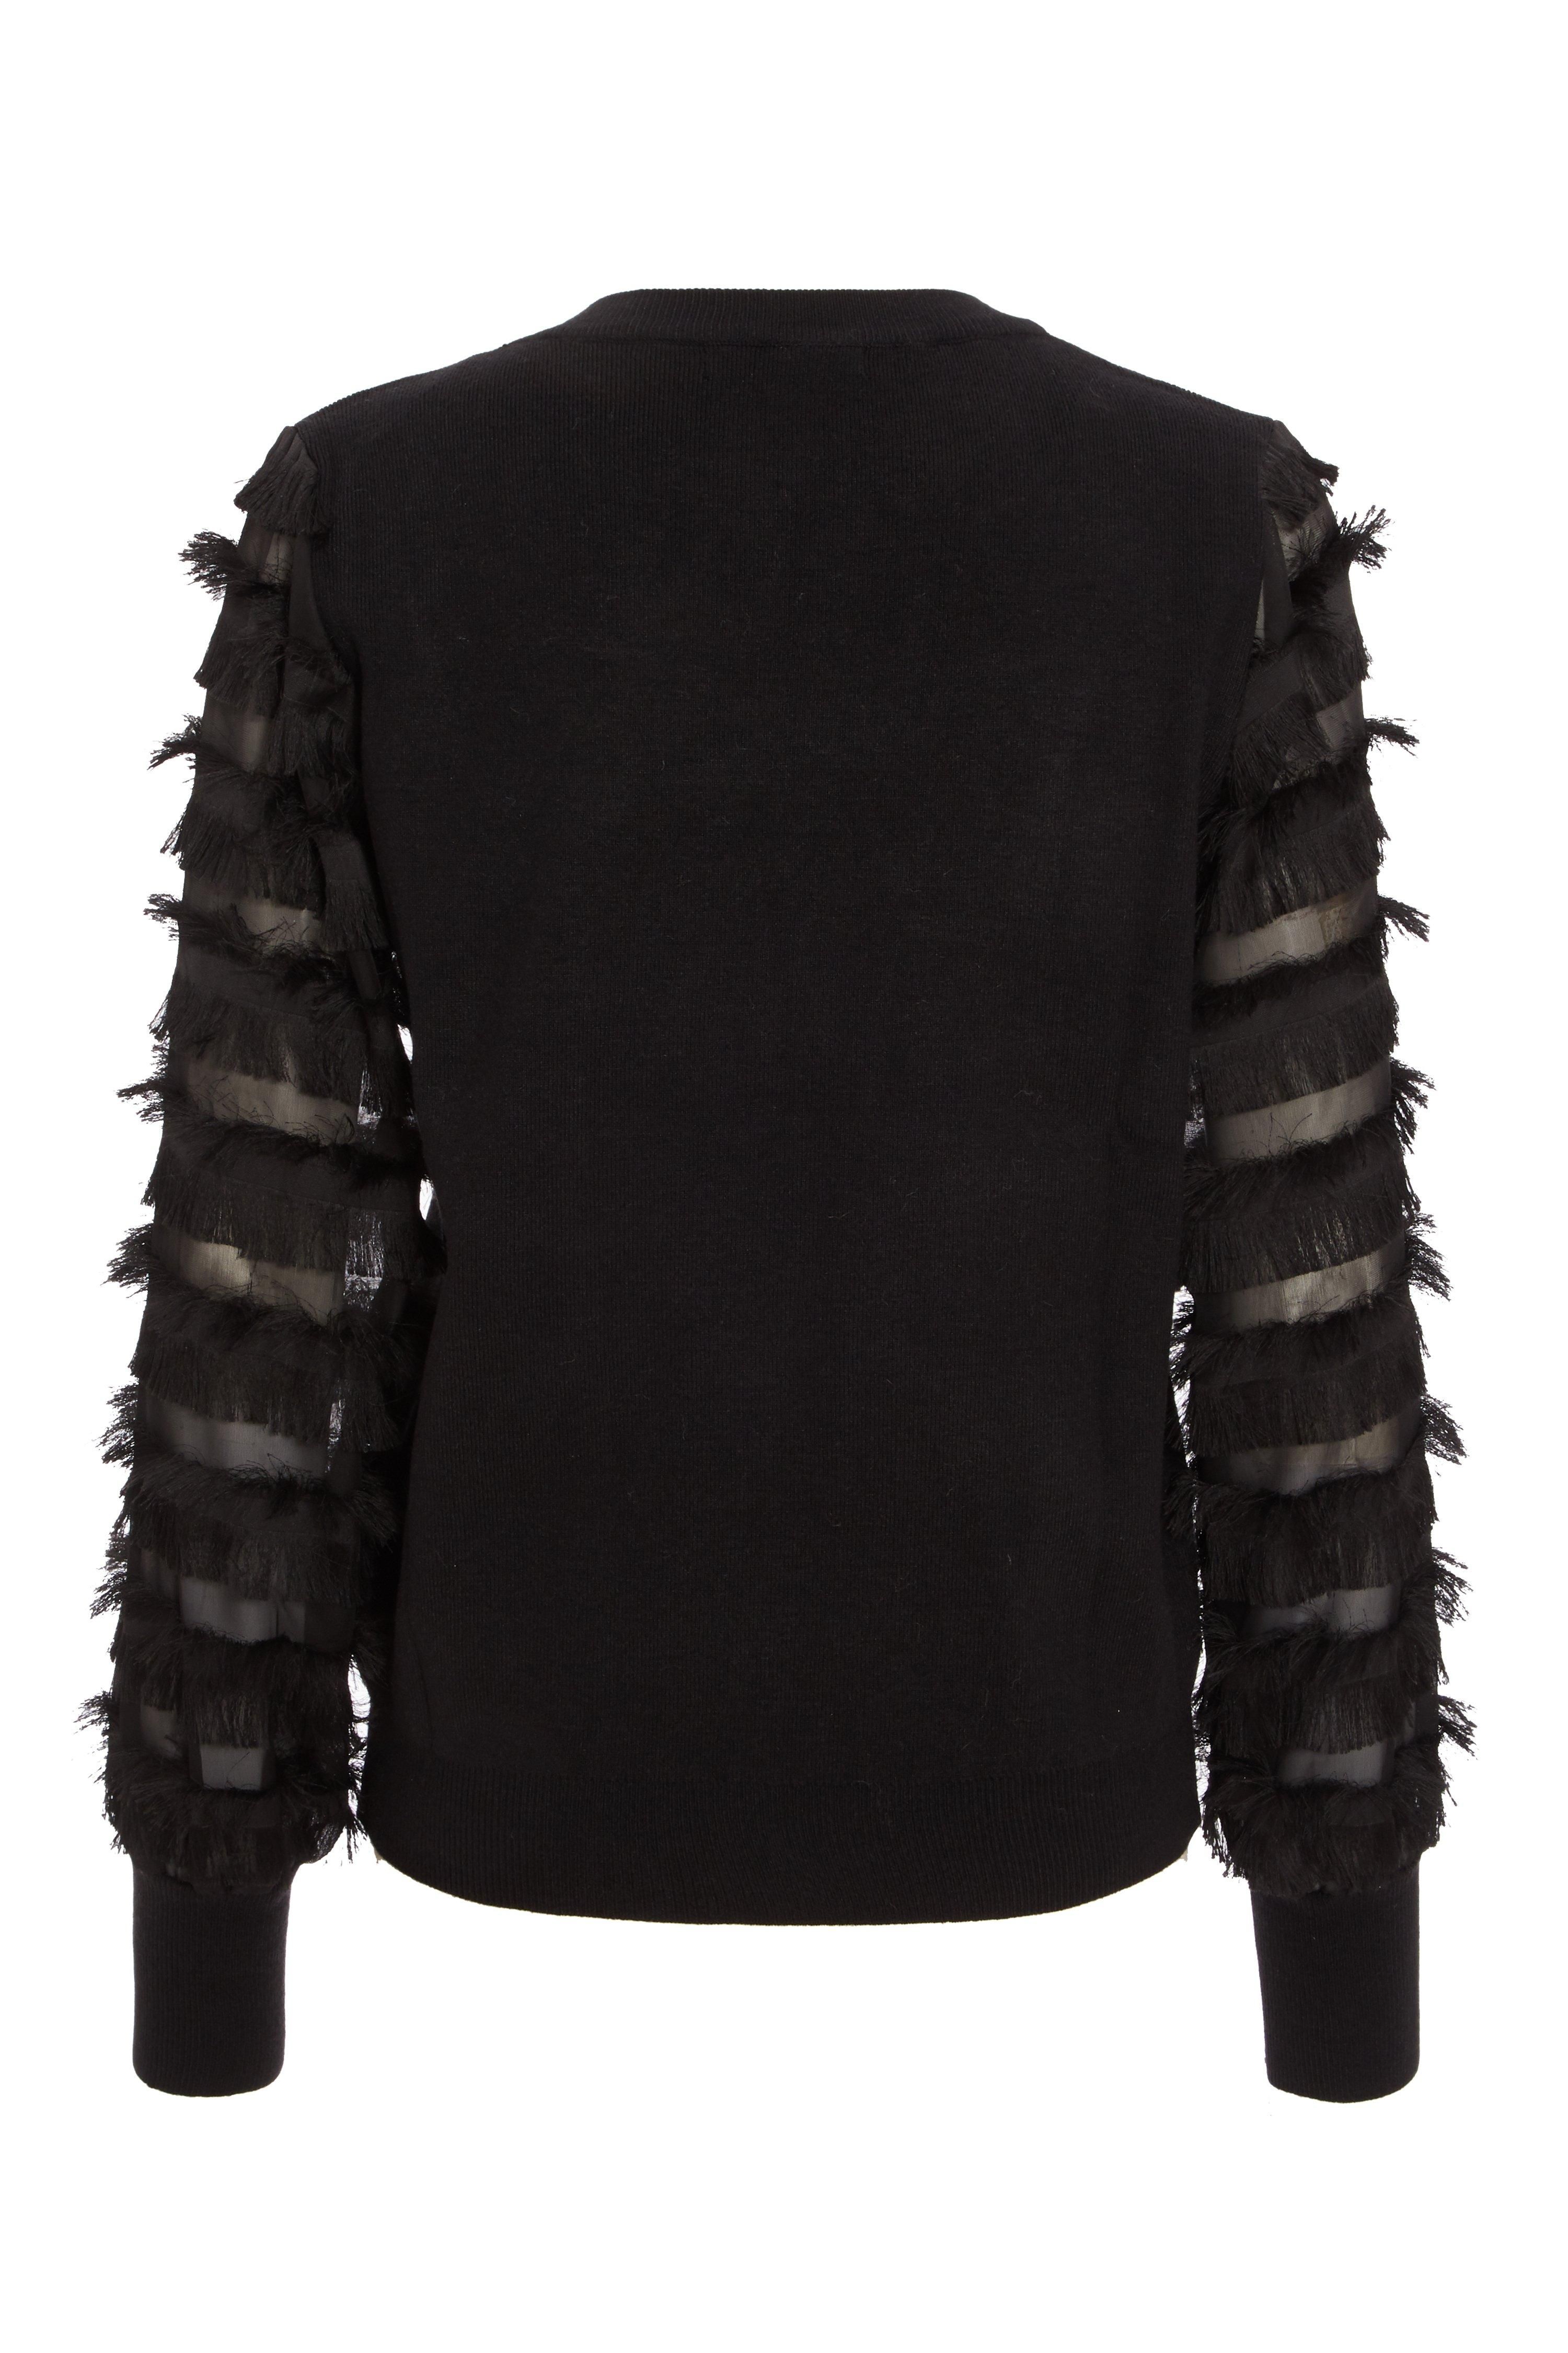 - Knitted jumper  - Fringe sleeve  - High neck  - Mesh detail  - Length: 65cm approx